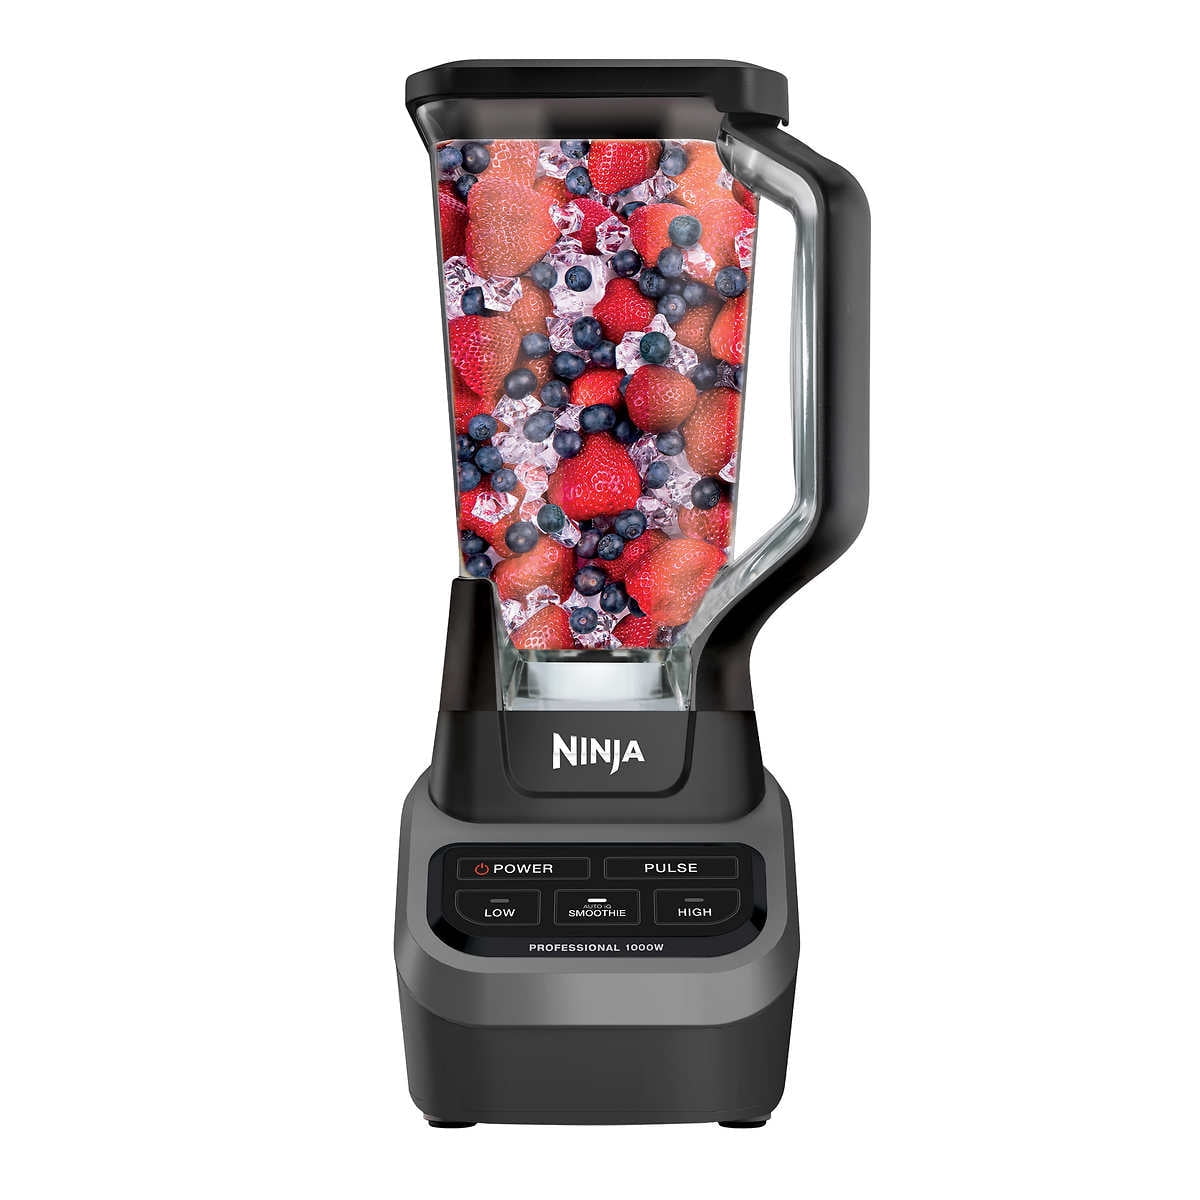 Ninja professional blender 1000 NEW, Appliances